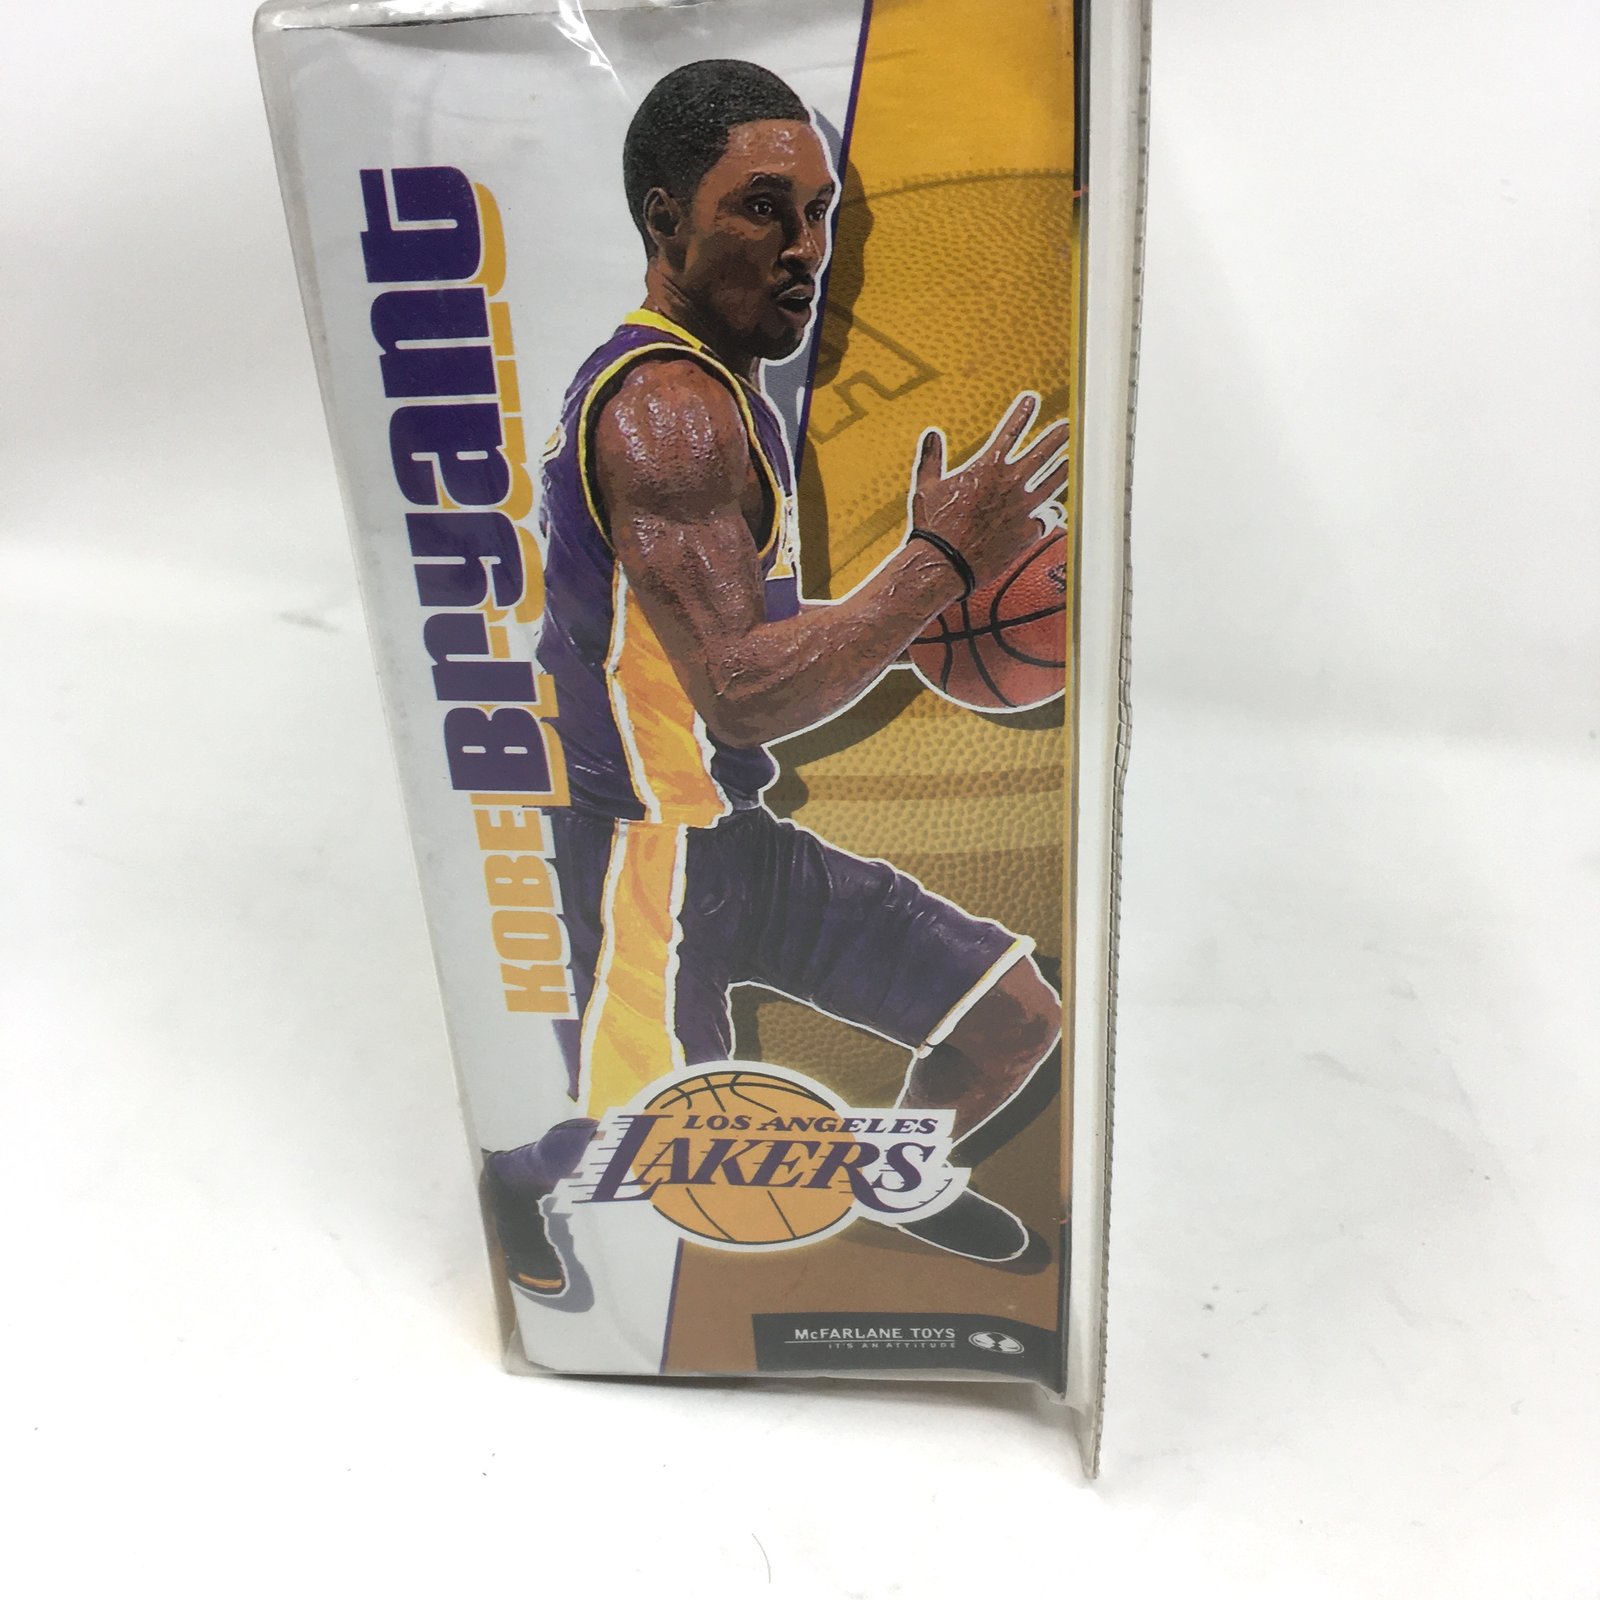 Nike NBA Los Angeles Lakers Icon Edition Kobe Bryant Swingman Jersey White/Purple/Amarillo